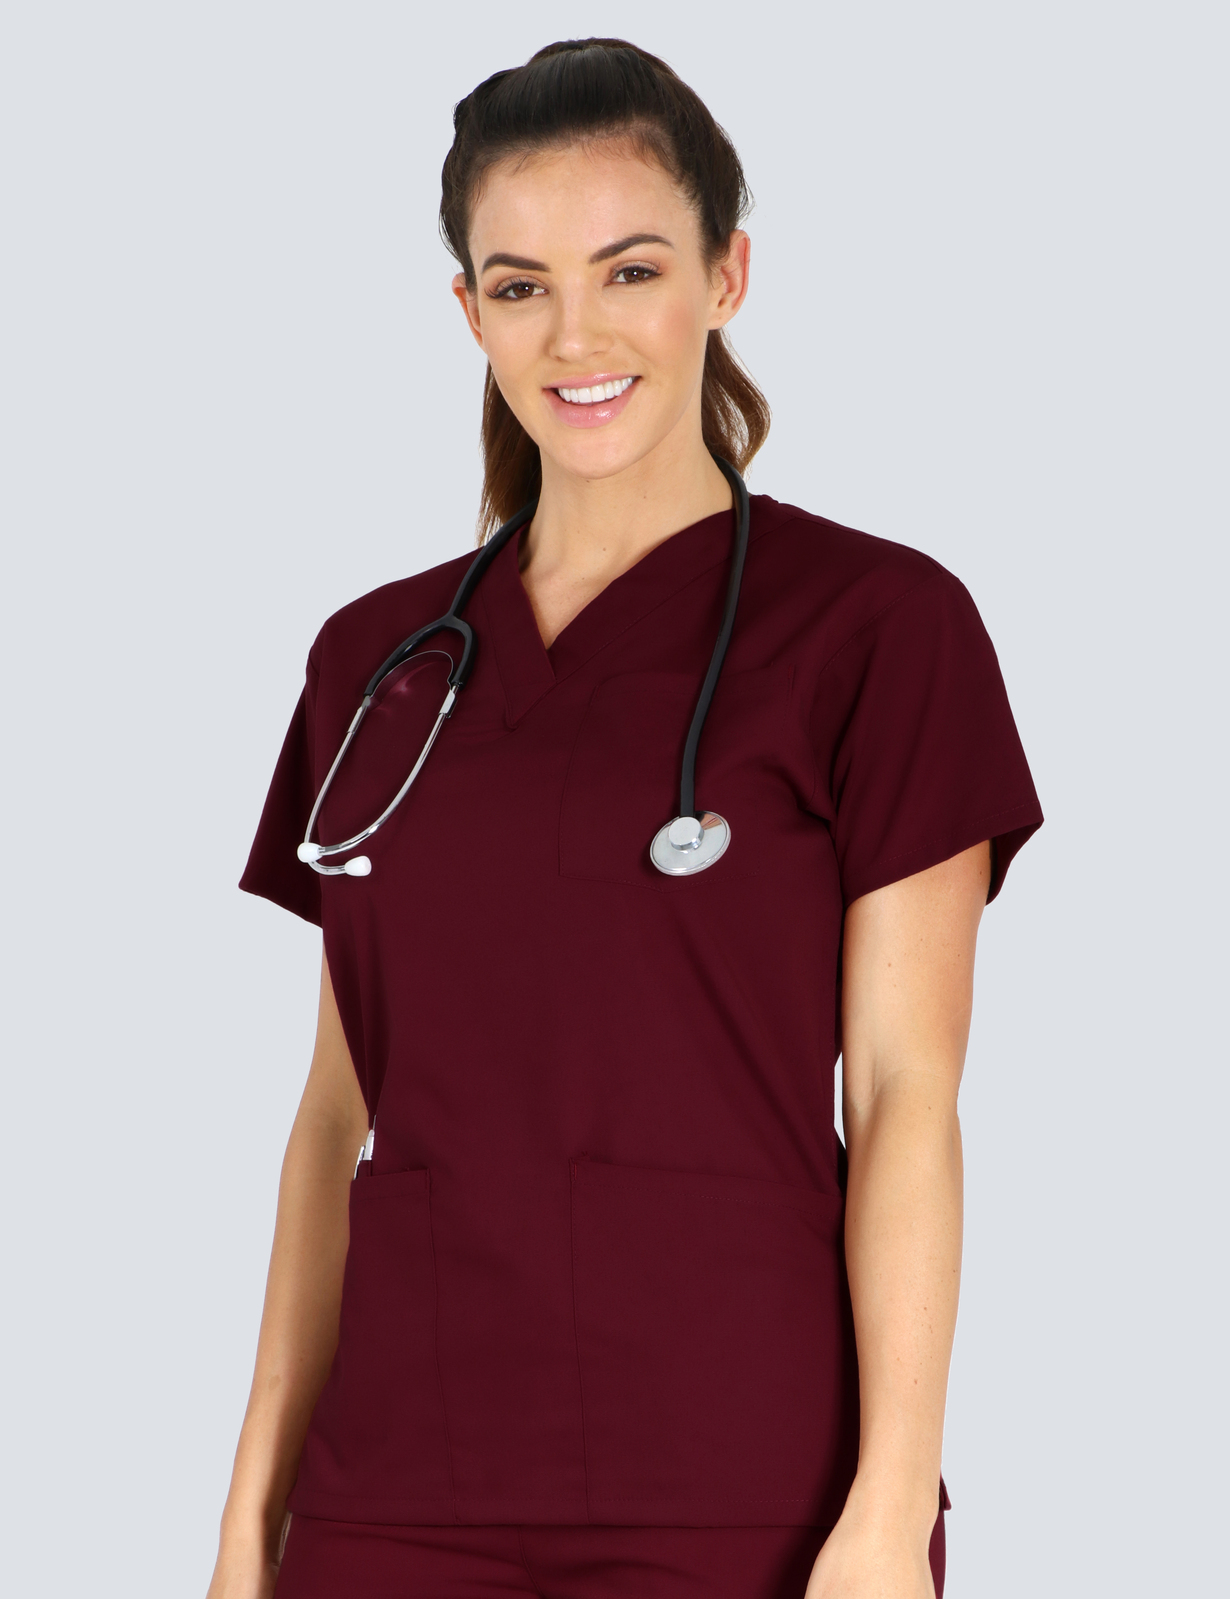 Queensland Children's Hospital Emergency Department Enrolled Nurse Uniform Top Bundle  (4 Pocket Top  in Burgundy incl Logos)